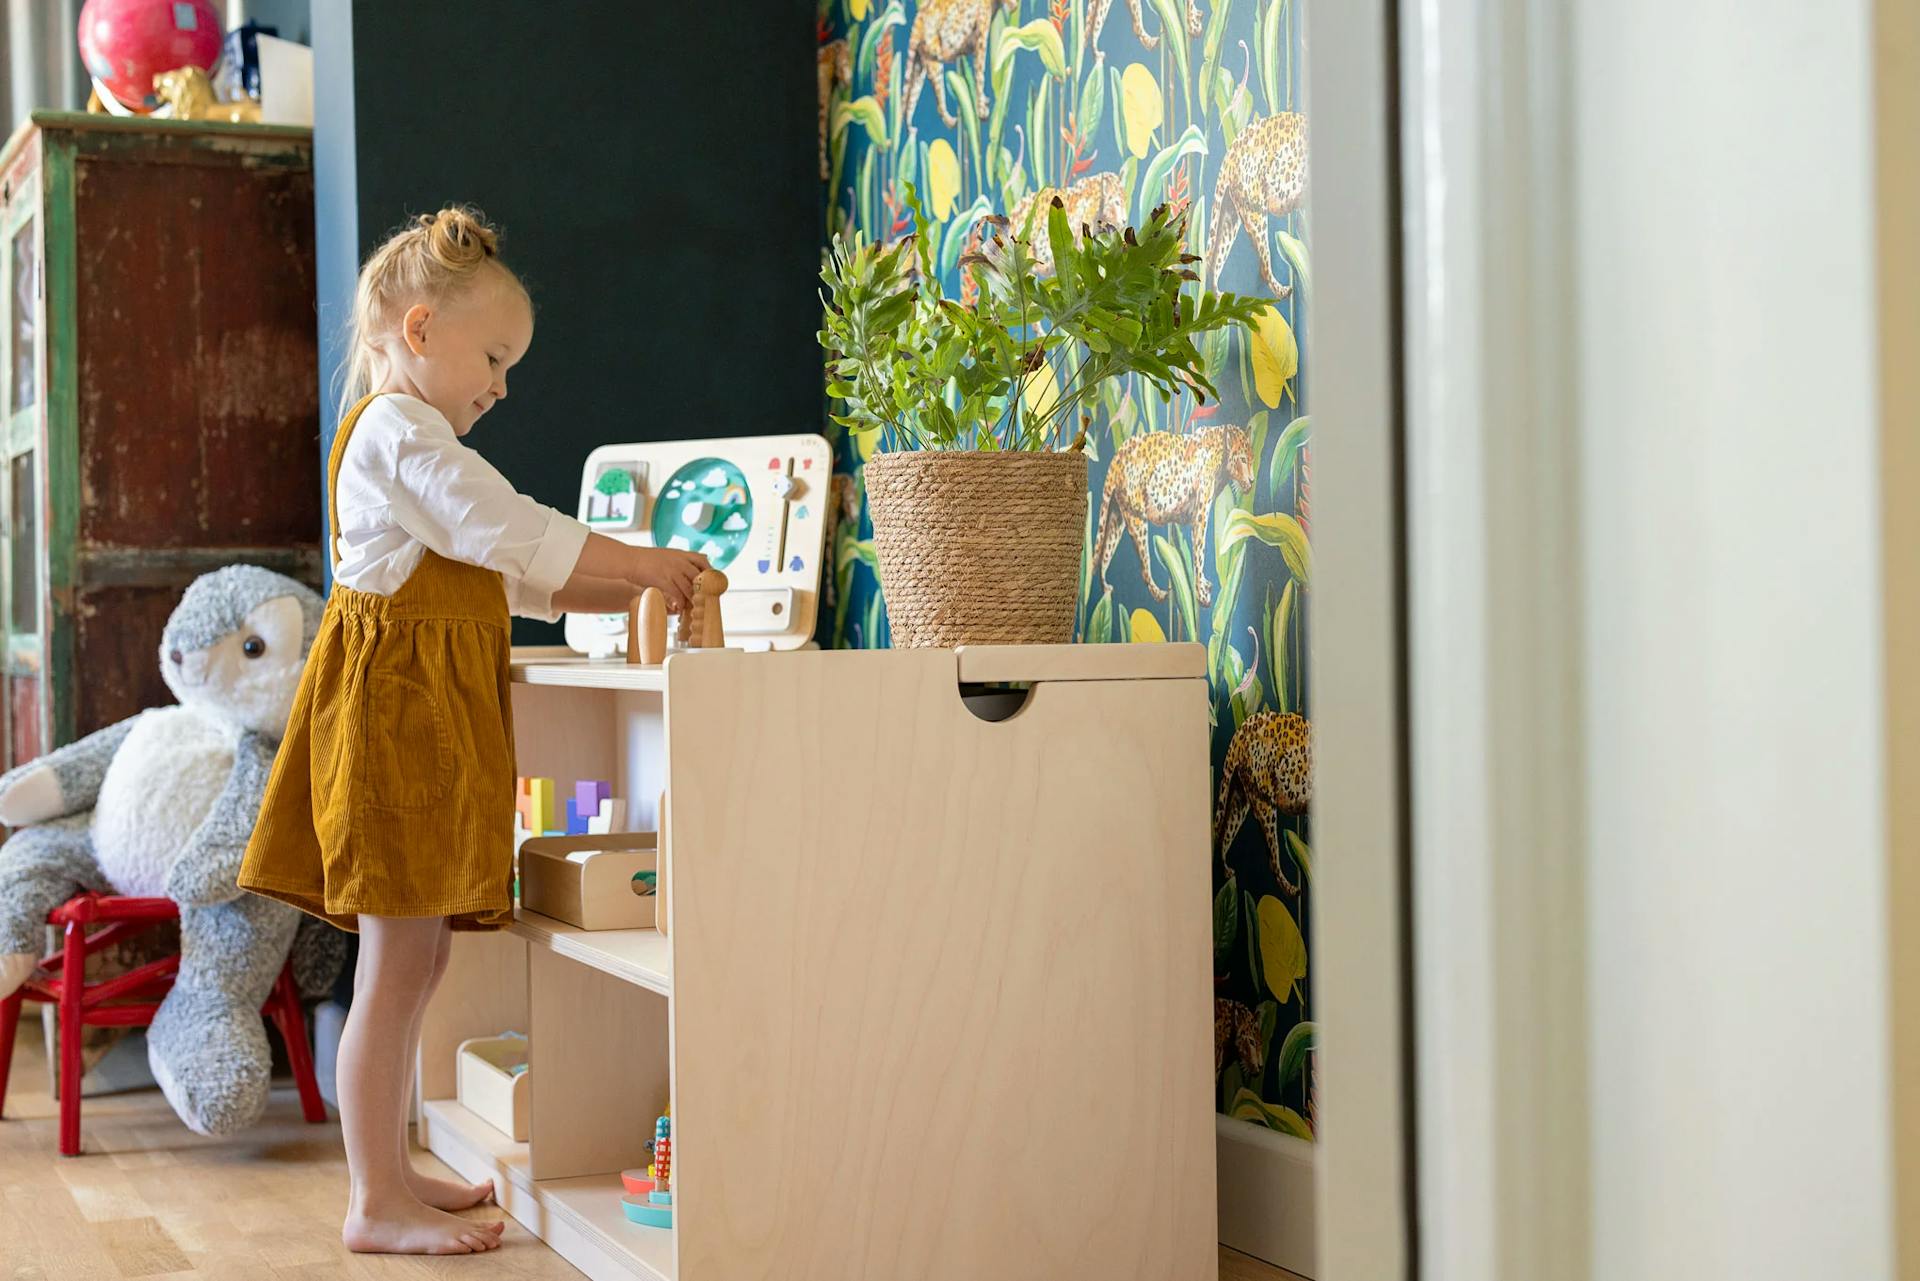 Montessori Playshelf, Store & Organize Your Toys